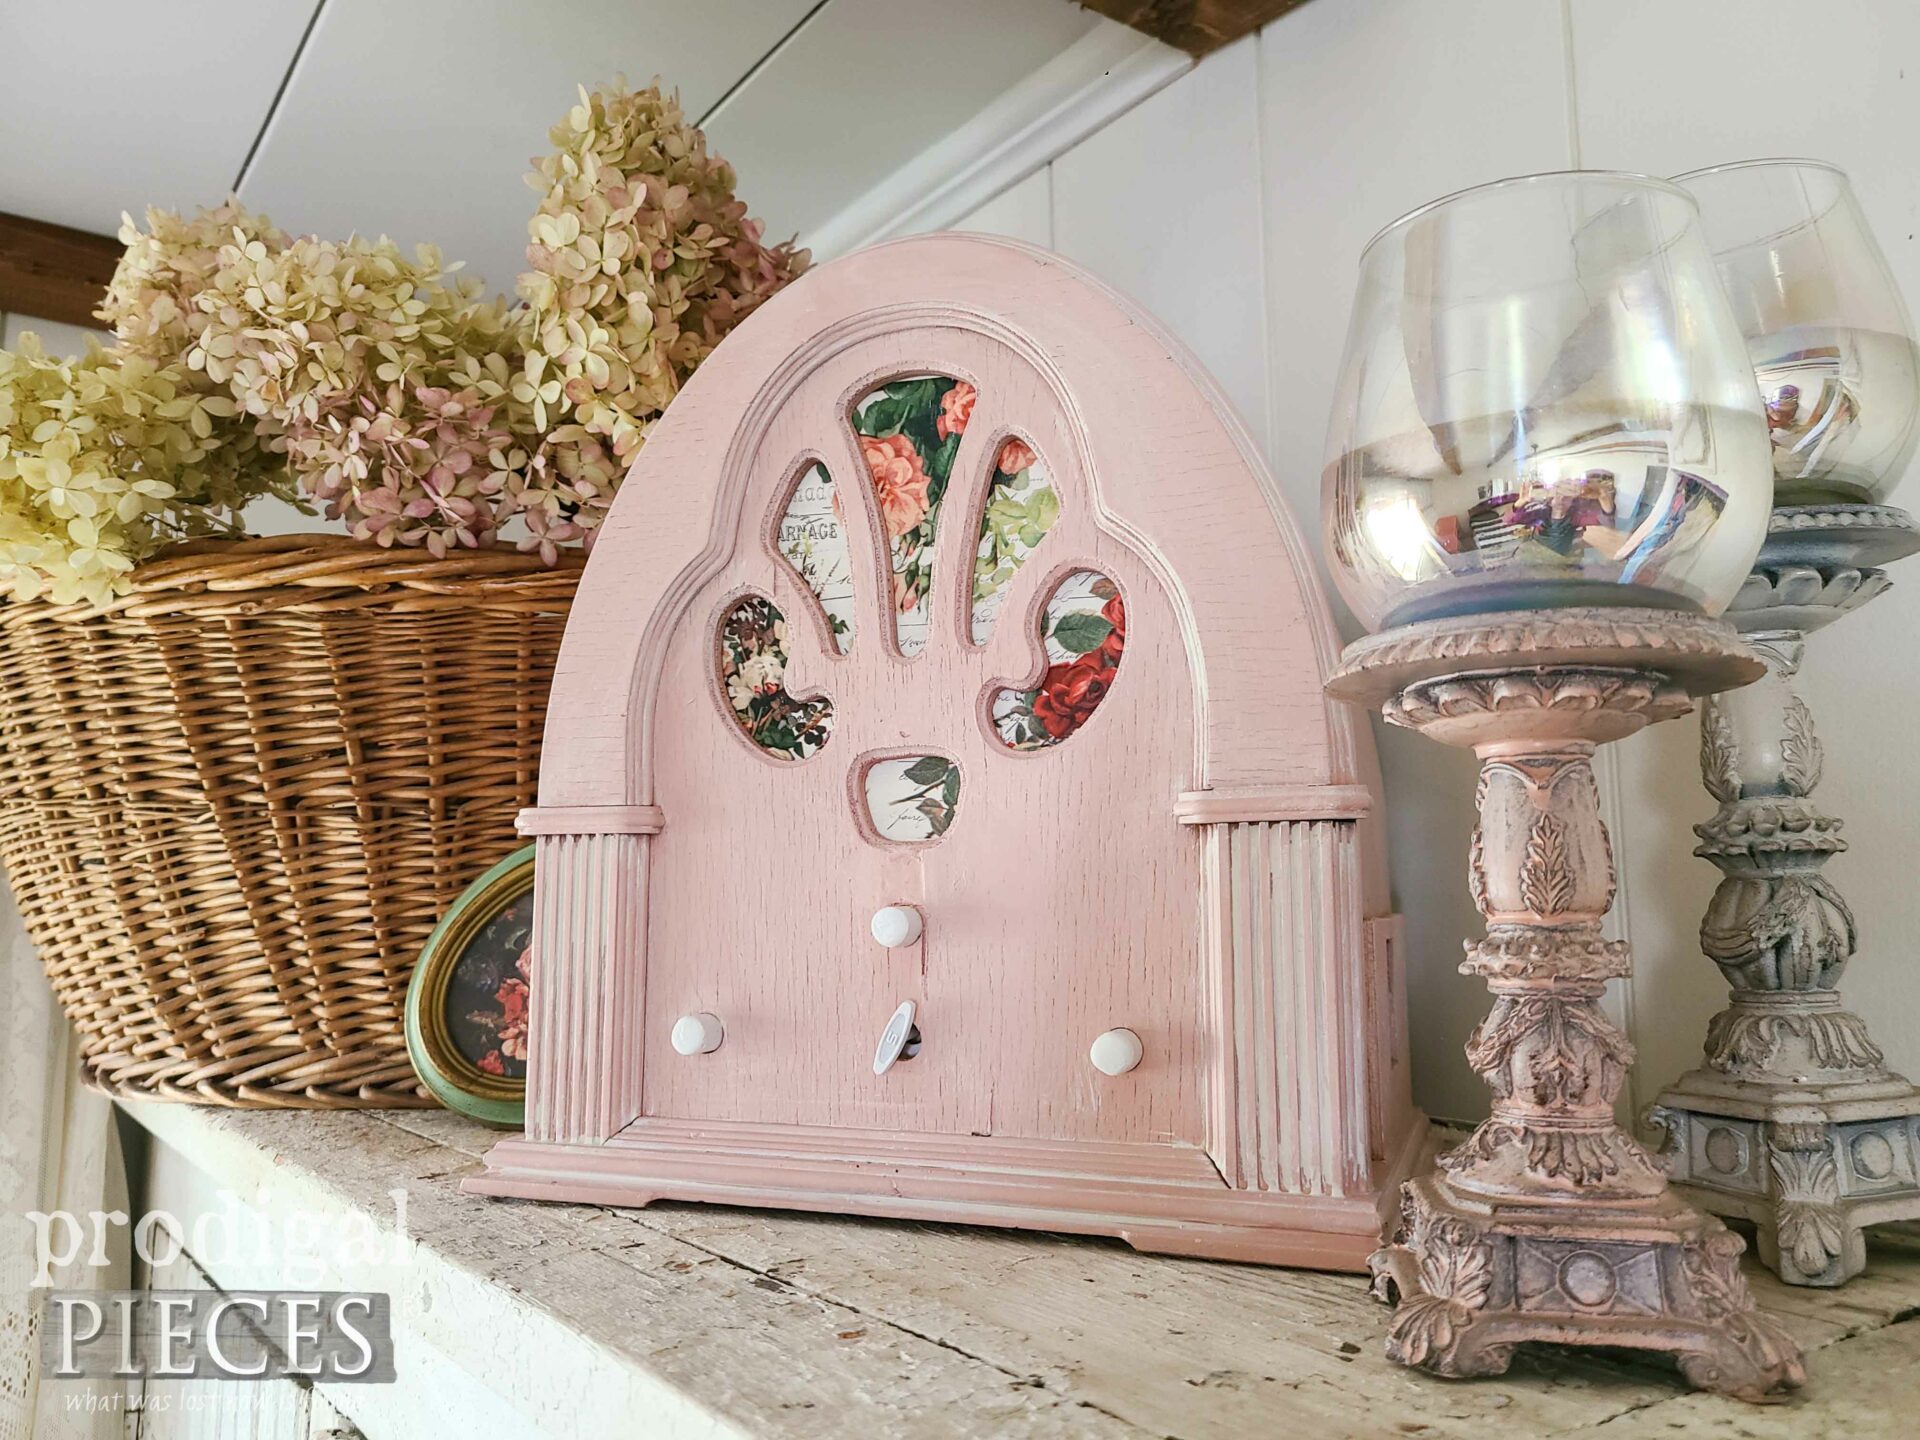 Pink Antique Radio Upcycled by Larissa of Prodigal Pieces | prodigalpieces.com #prodigalpieces #antique #repurposed 